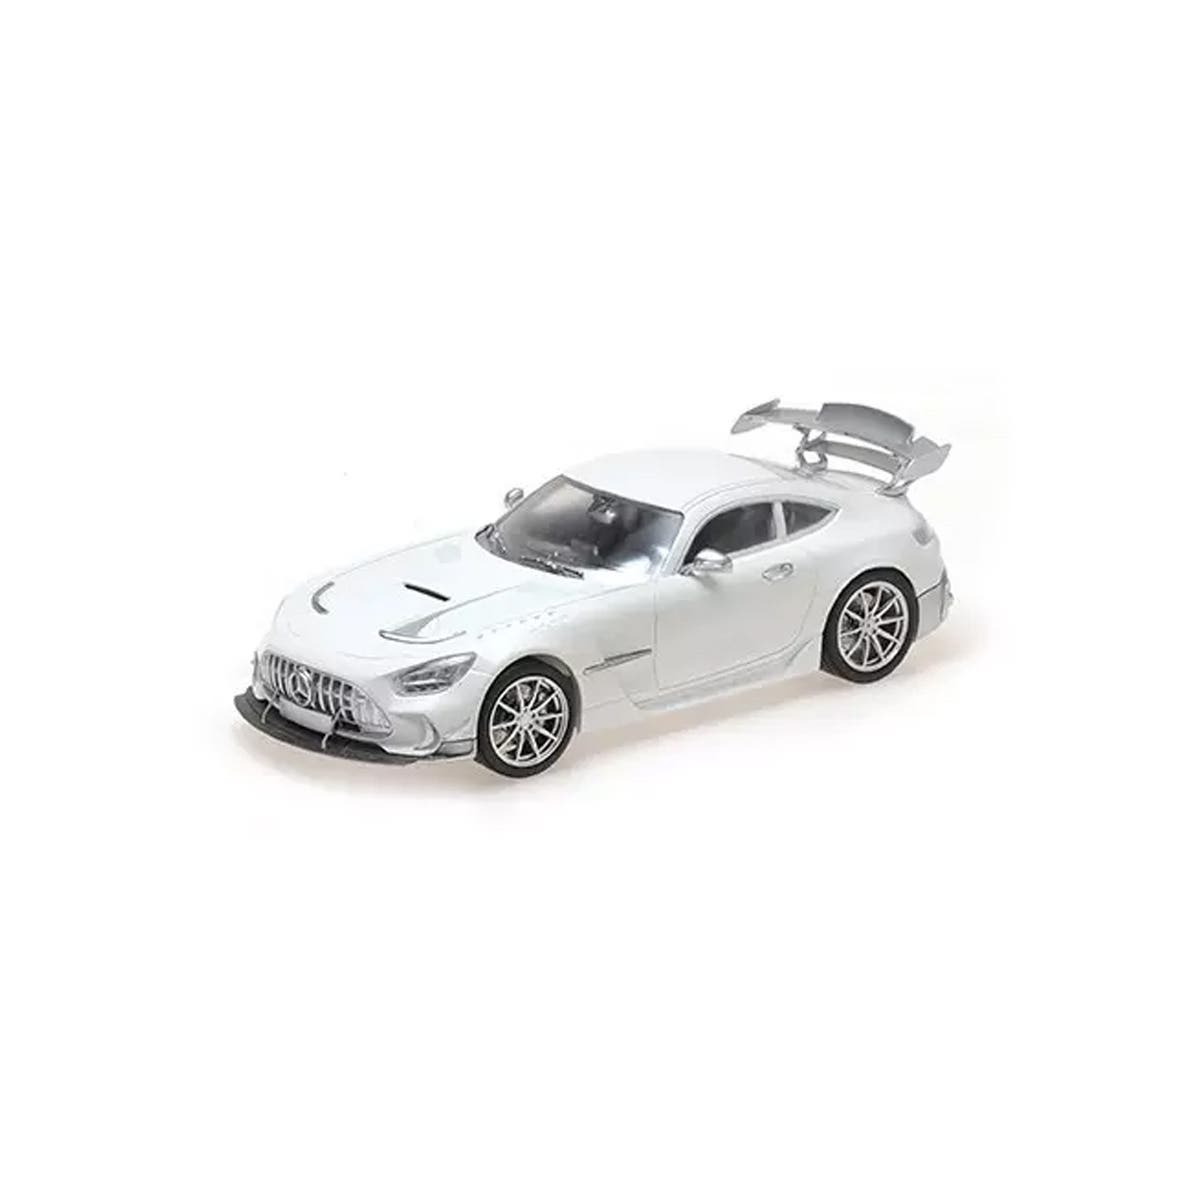 MERCEDES-AMG GT BLACK SERIES - 2020 - WHITE METALLIC - 1:18 Scale Diecast Model Car